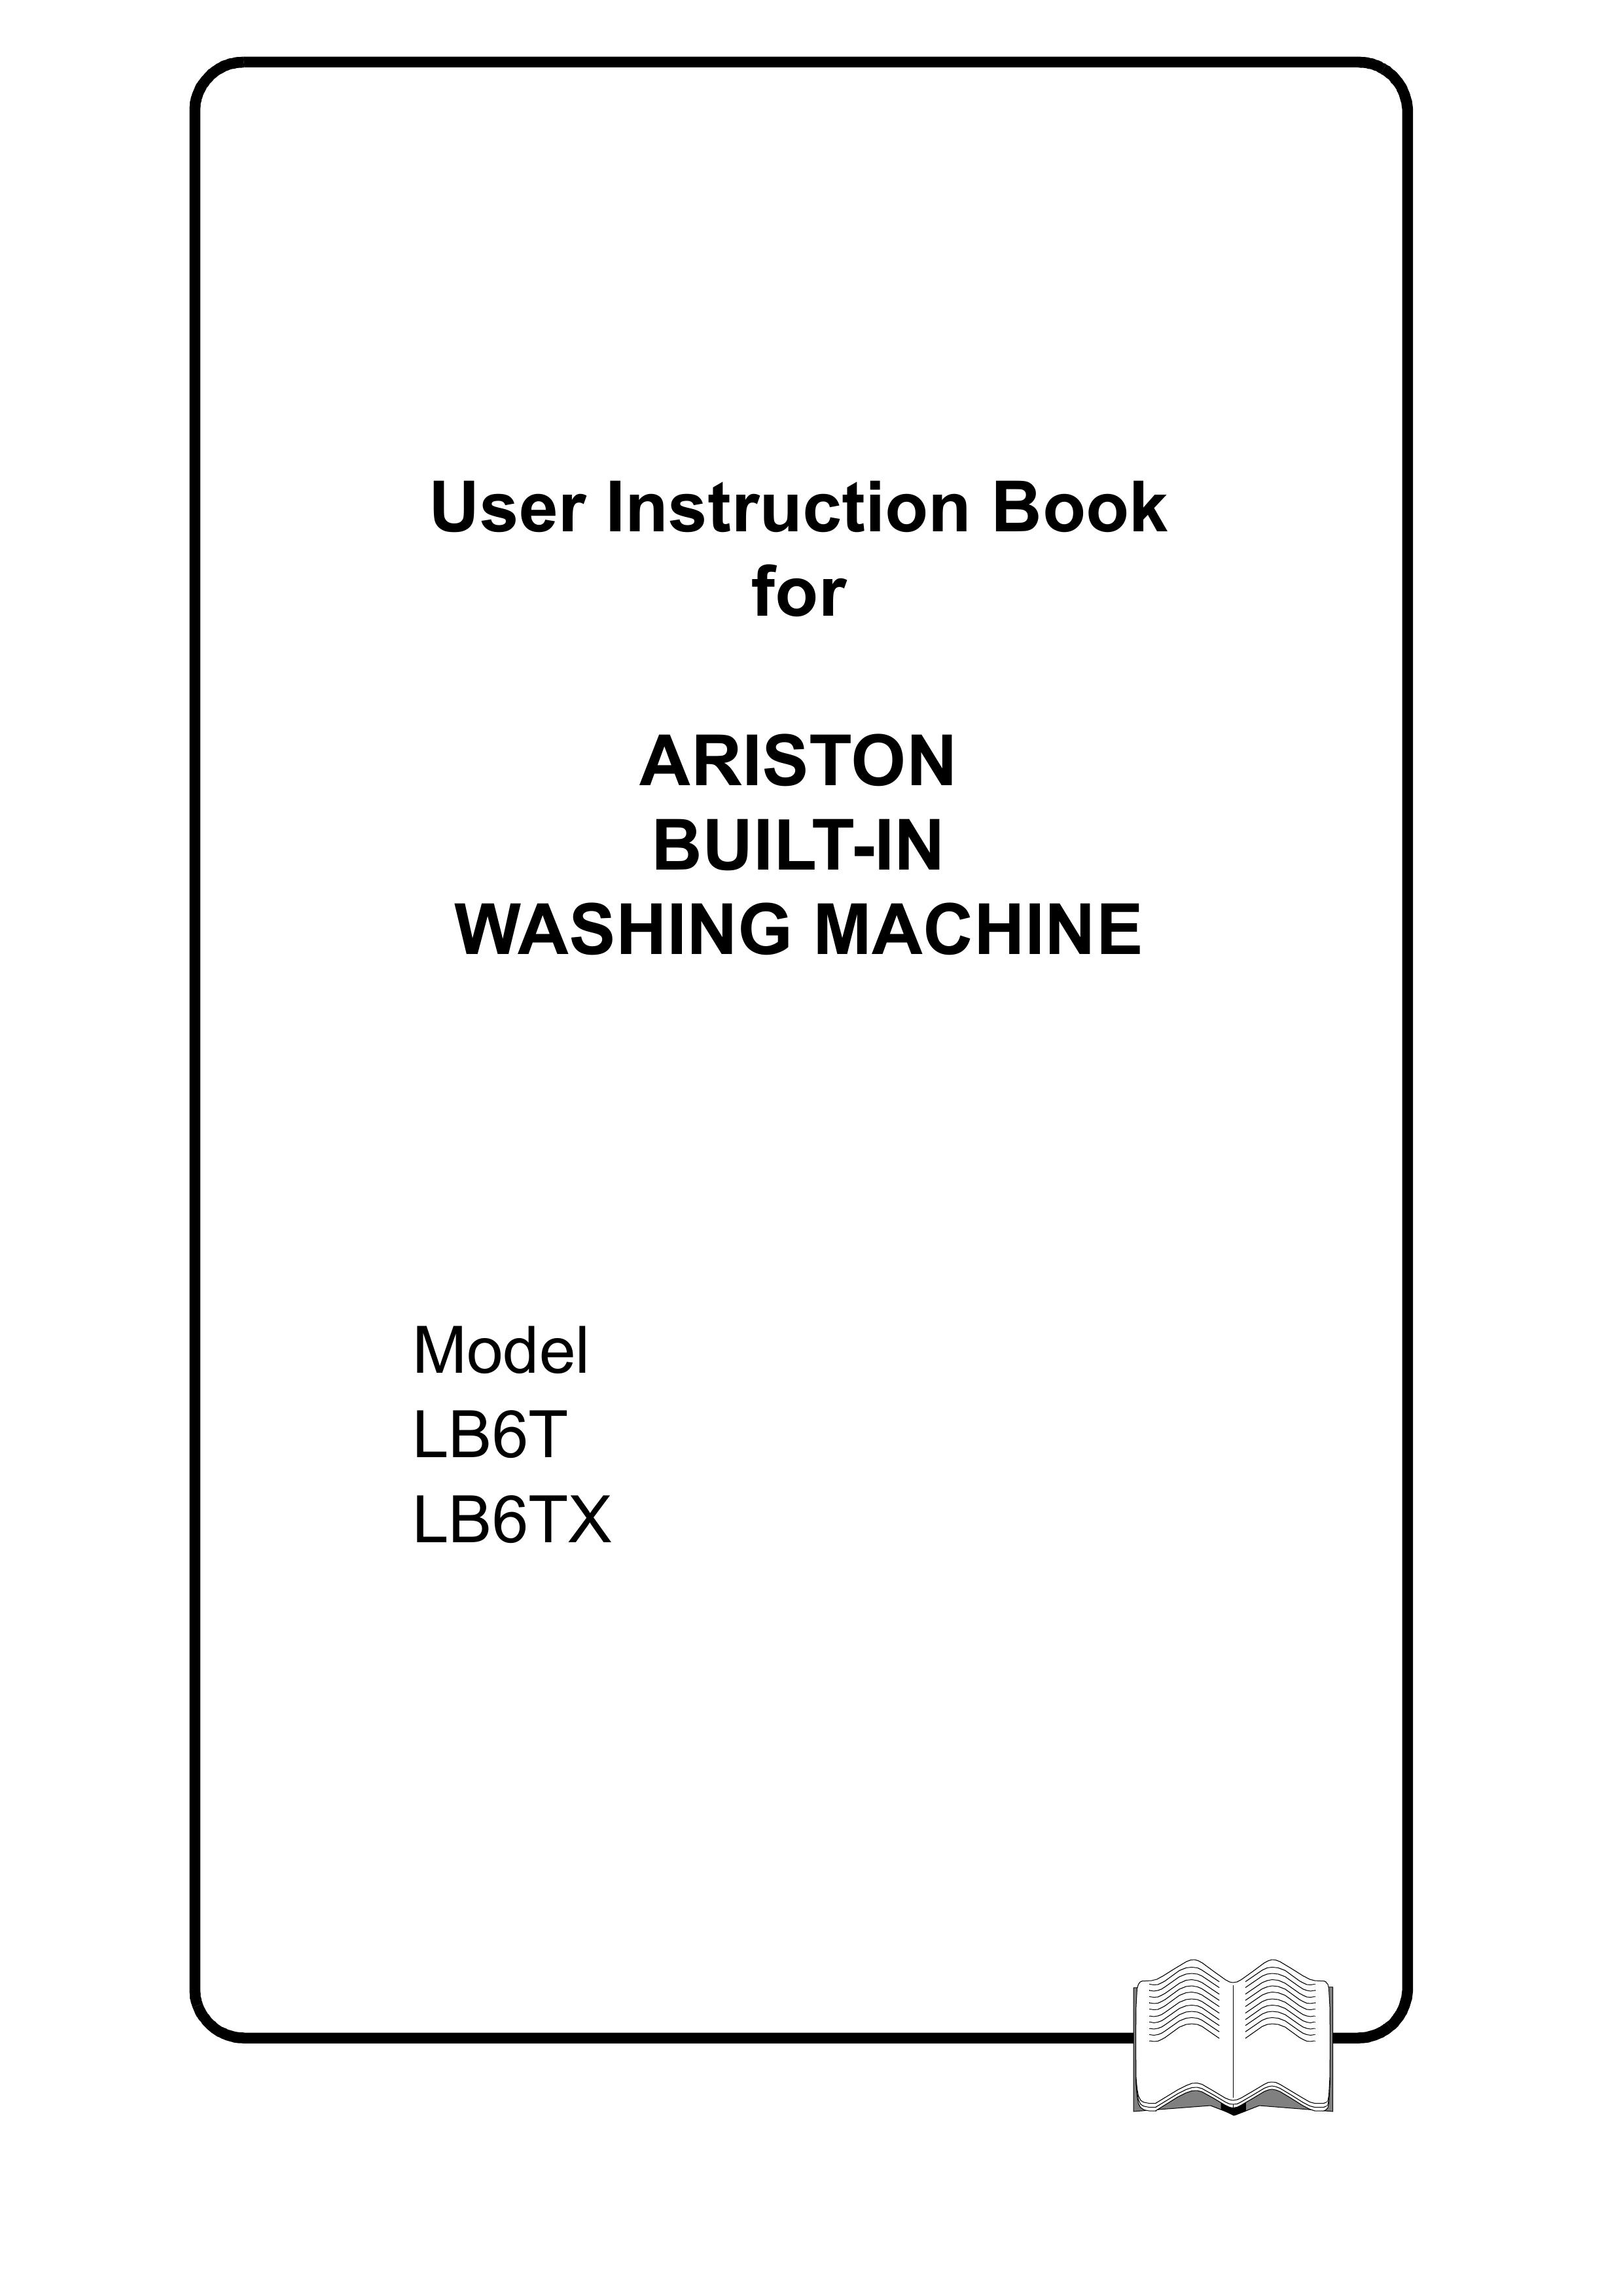 Ariston LB6TX Washer User Manual